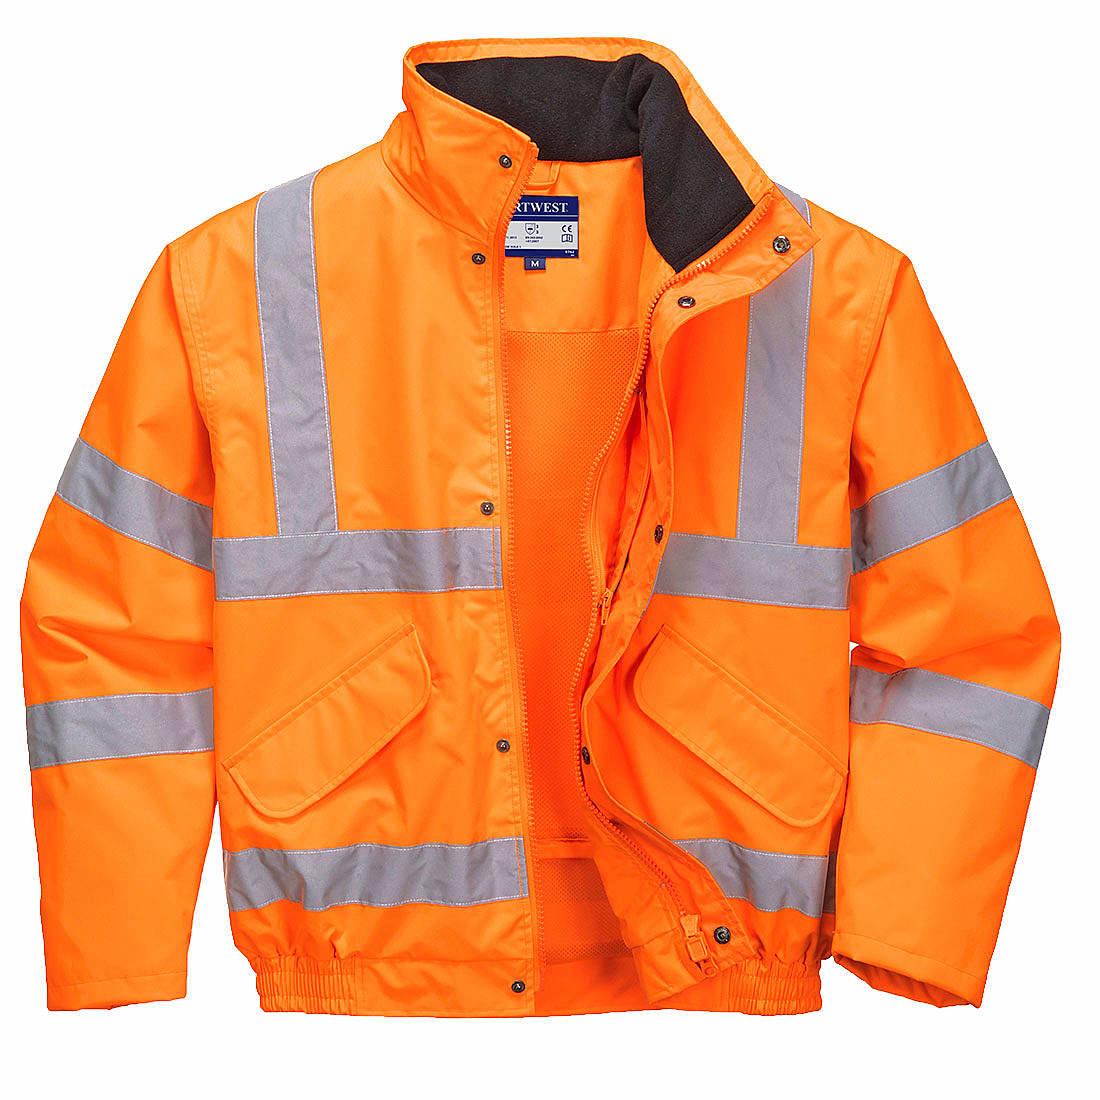 Portwest Hi-Viz Breathable Mesh Lined Jacket in Orange (Product Code: RT62)